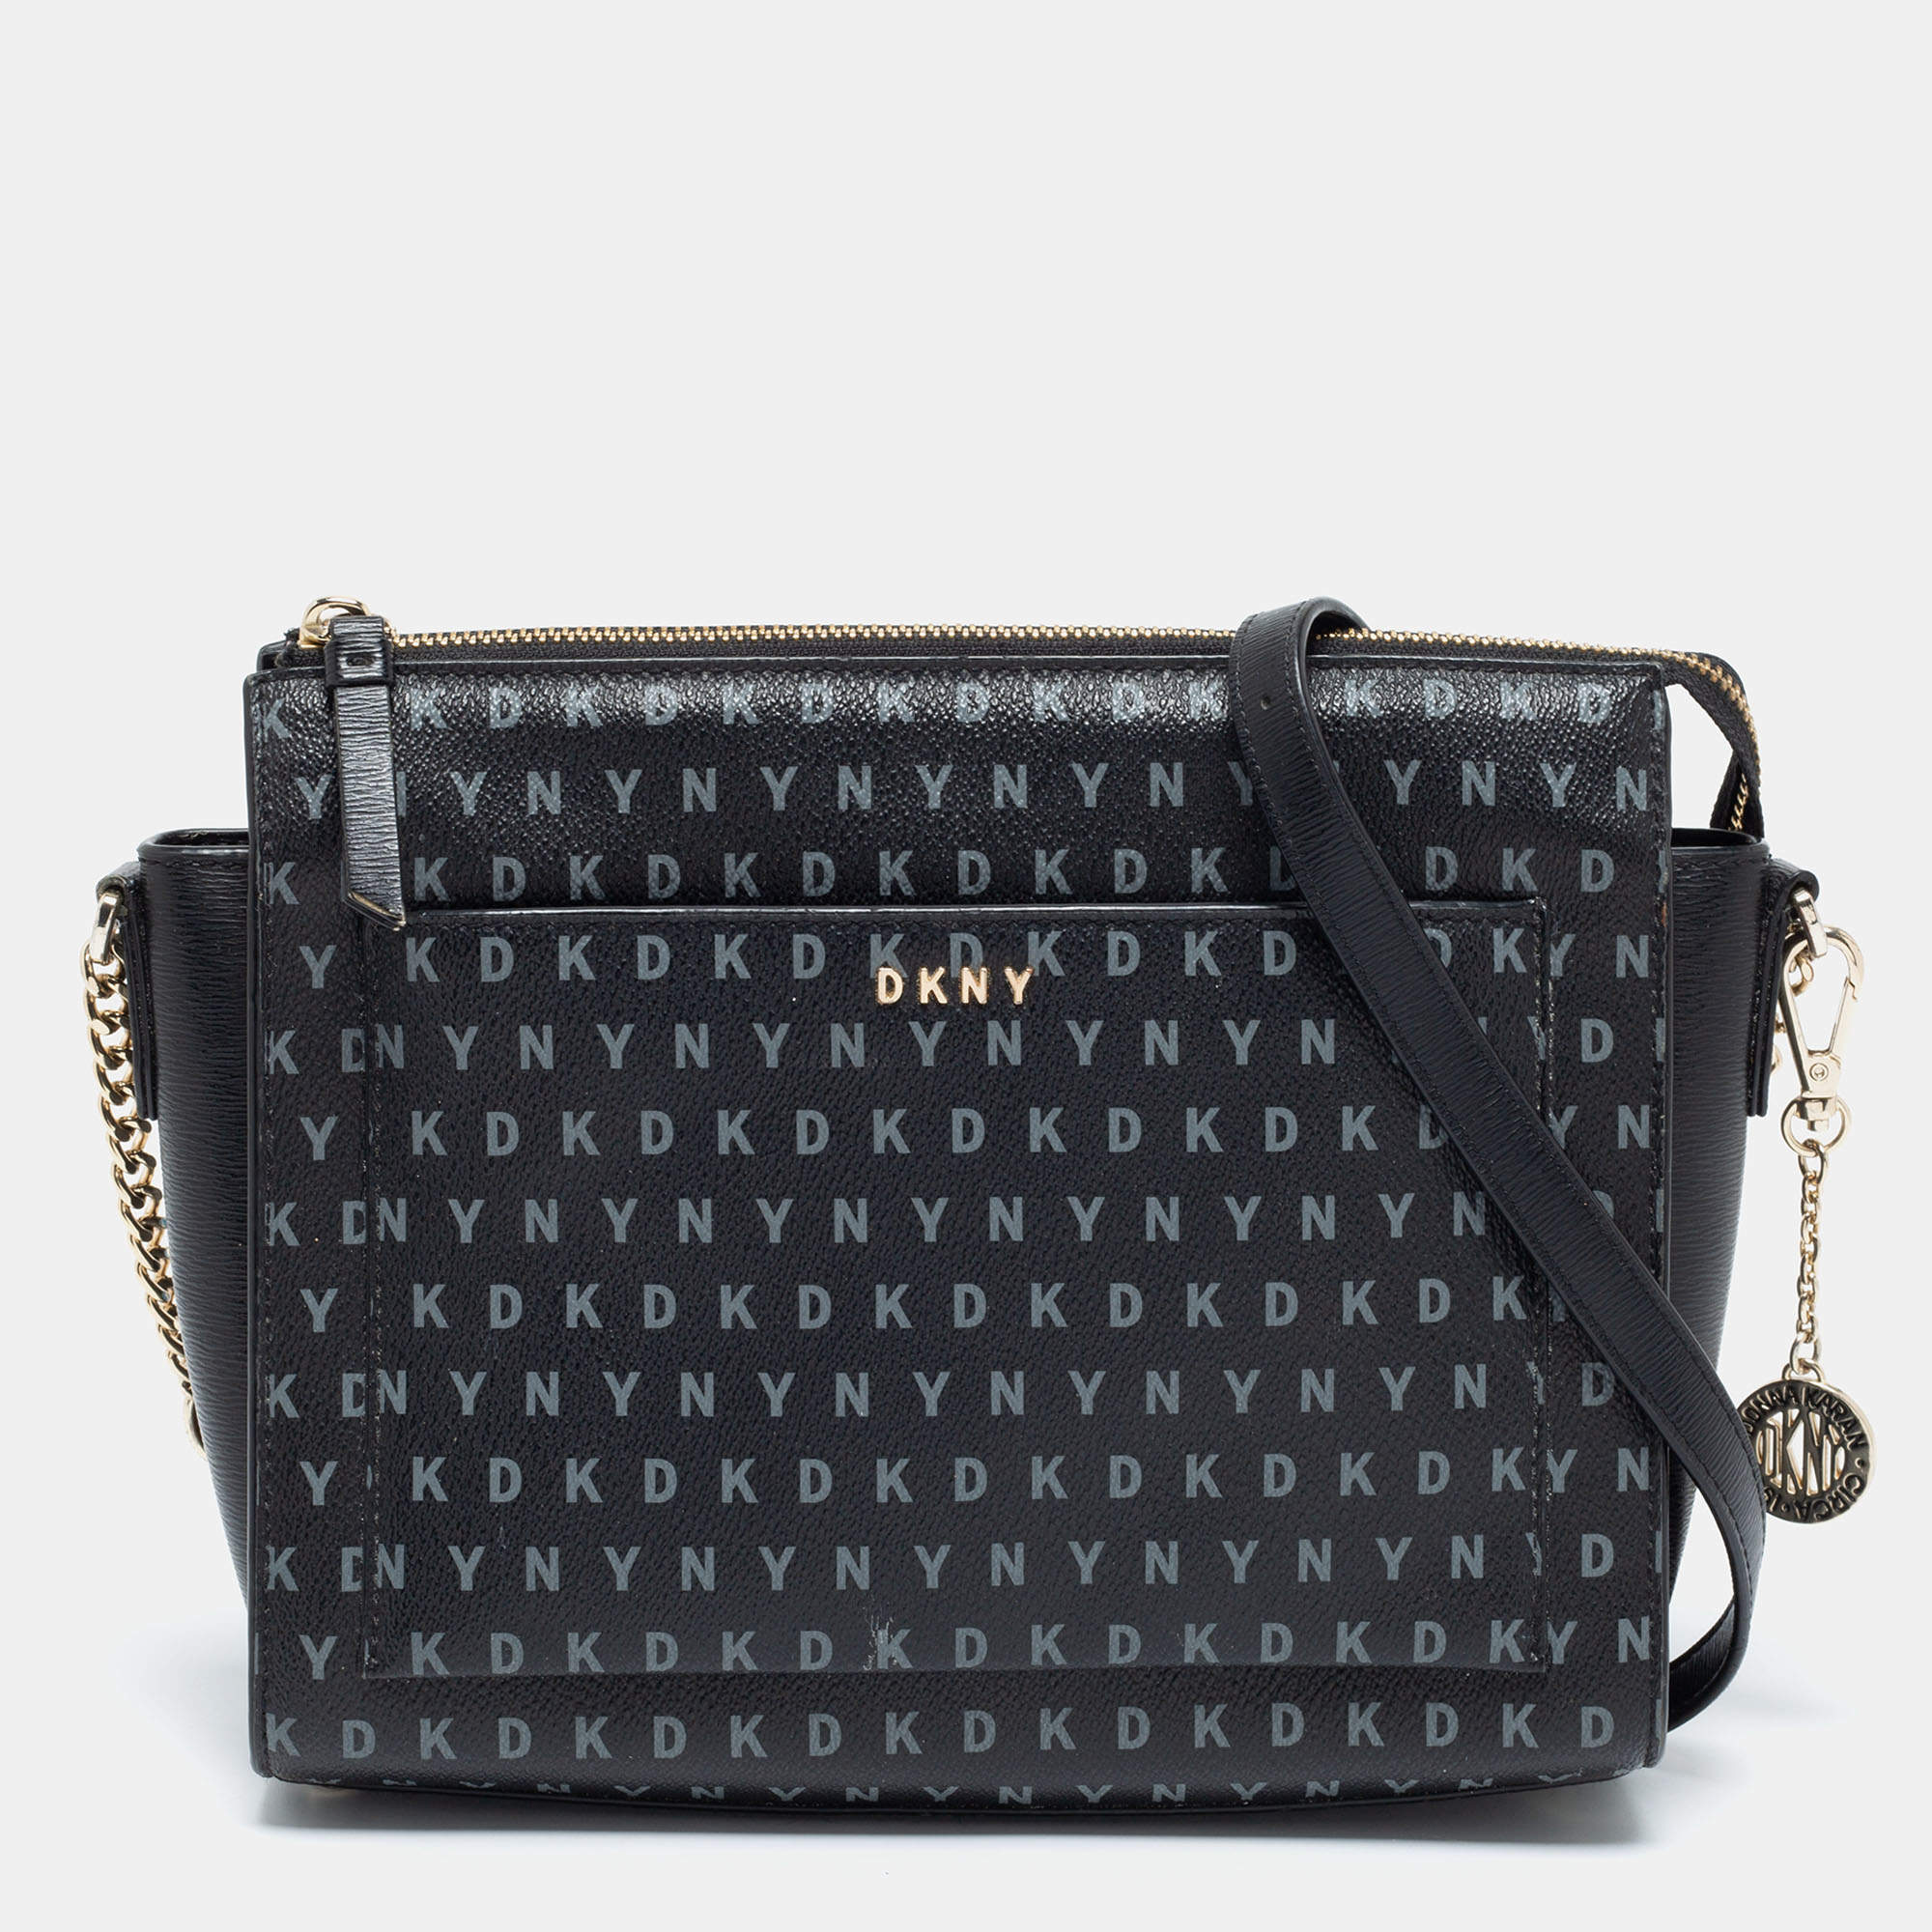 DKNY Bags & Handbags for Women for sale | eBay